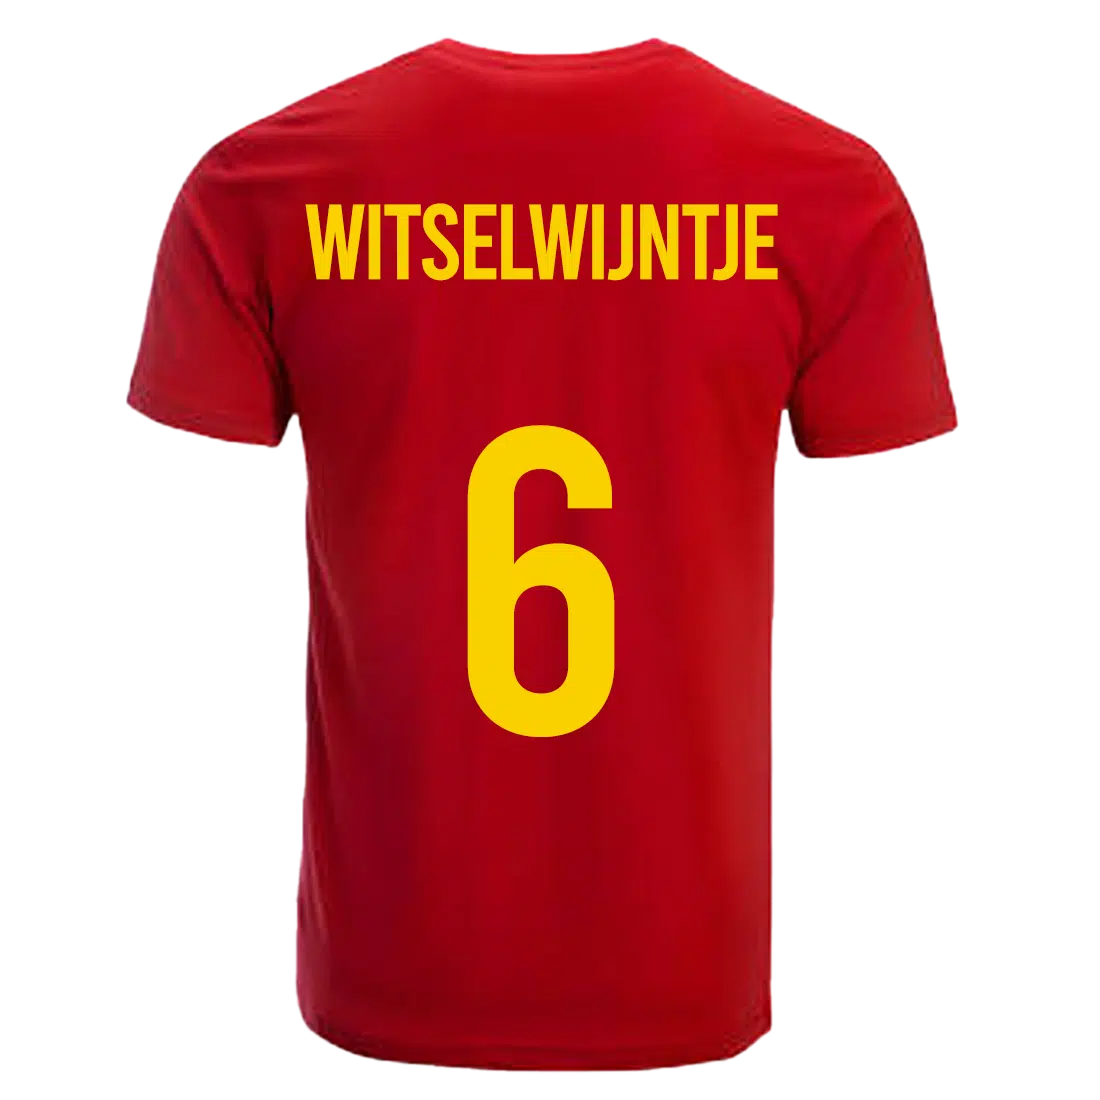 Witsel Belgie shirts achterkant